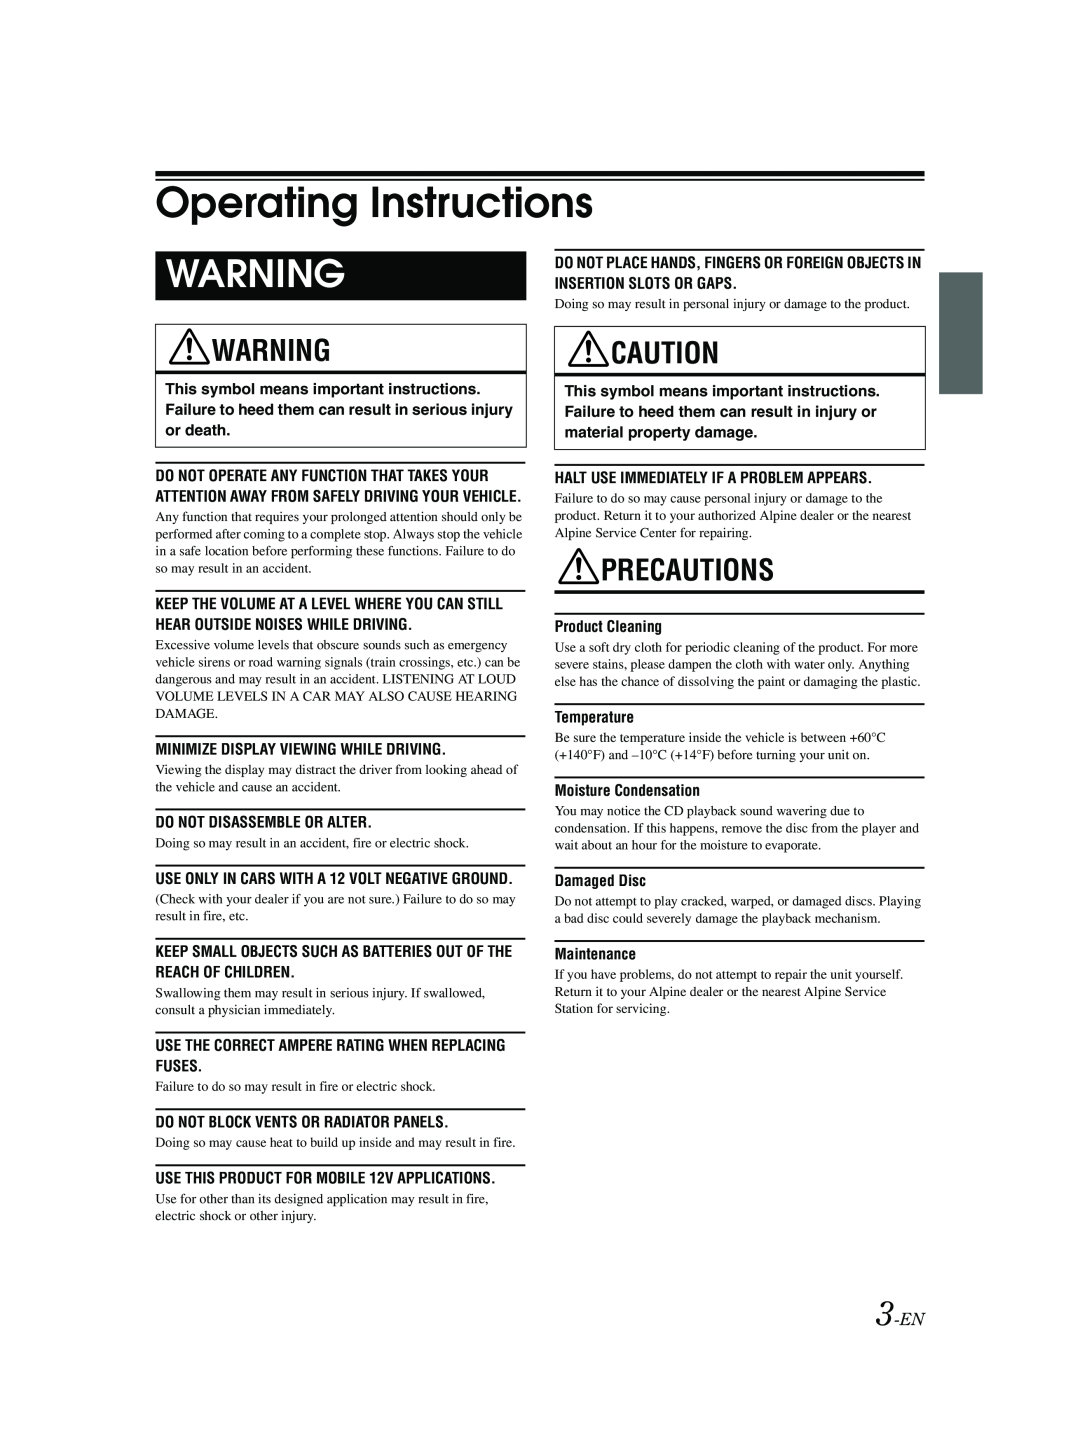 Alpine CDE-9881 owner manual Operating Instructions, Precautions, 3-EN 